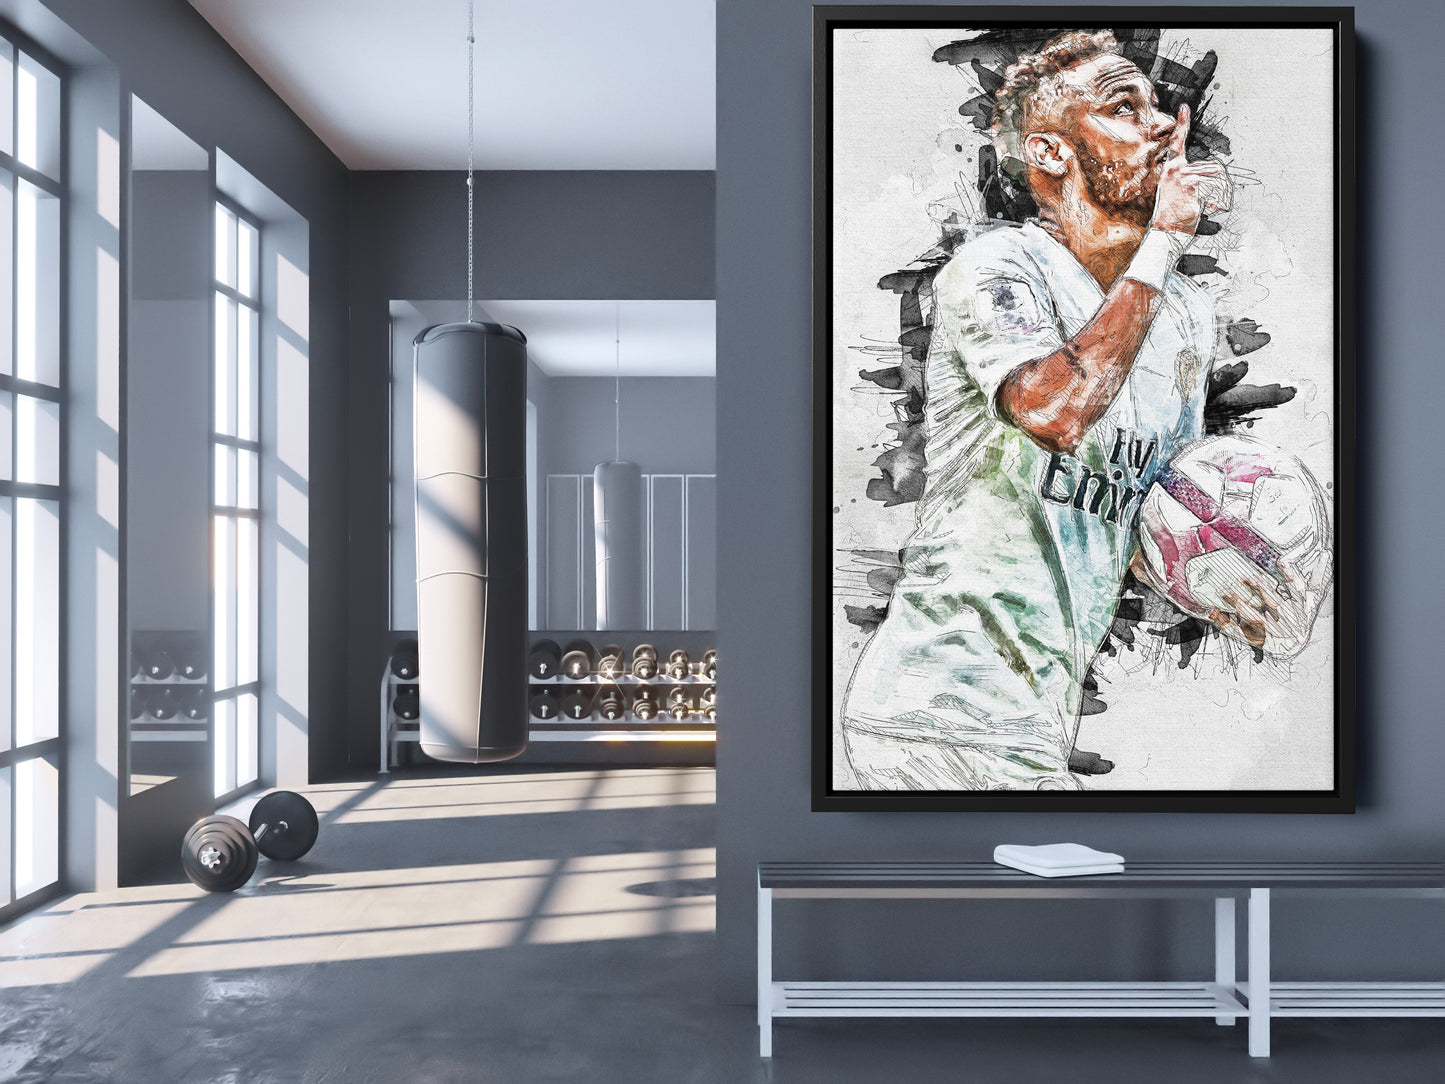 Neymar Poster Paris Saint Germain Soccer Painting Hand Made Posters Canvas Print Kids Wall Art Man Cave Gift Home Decor